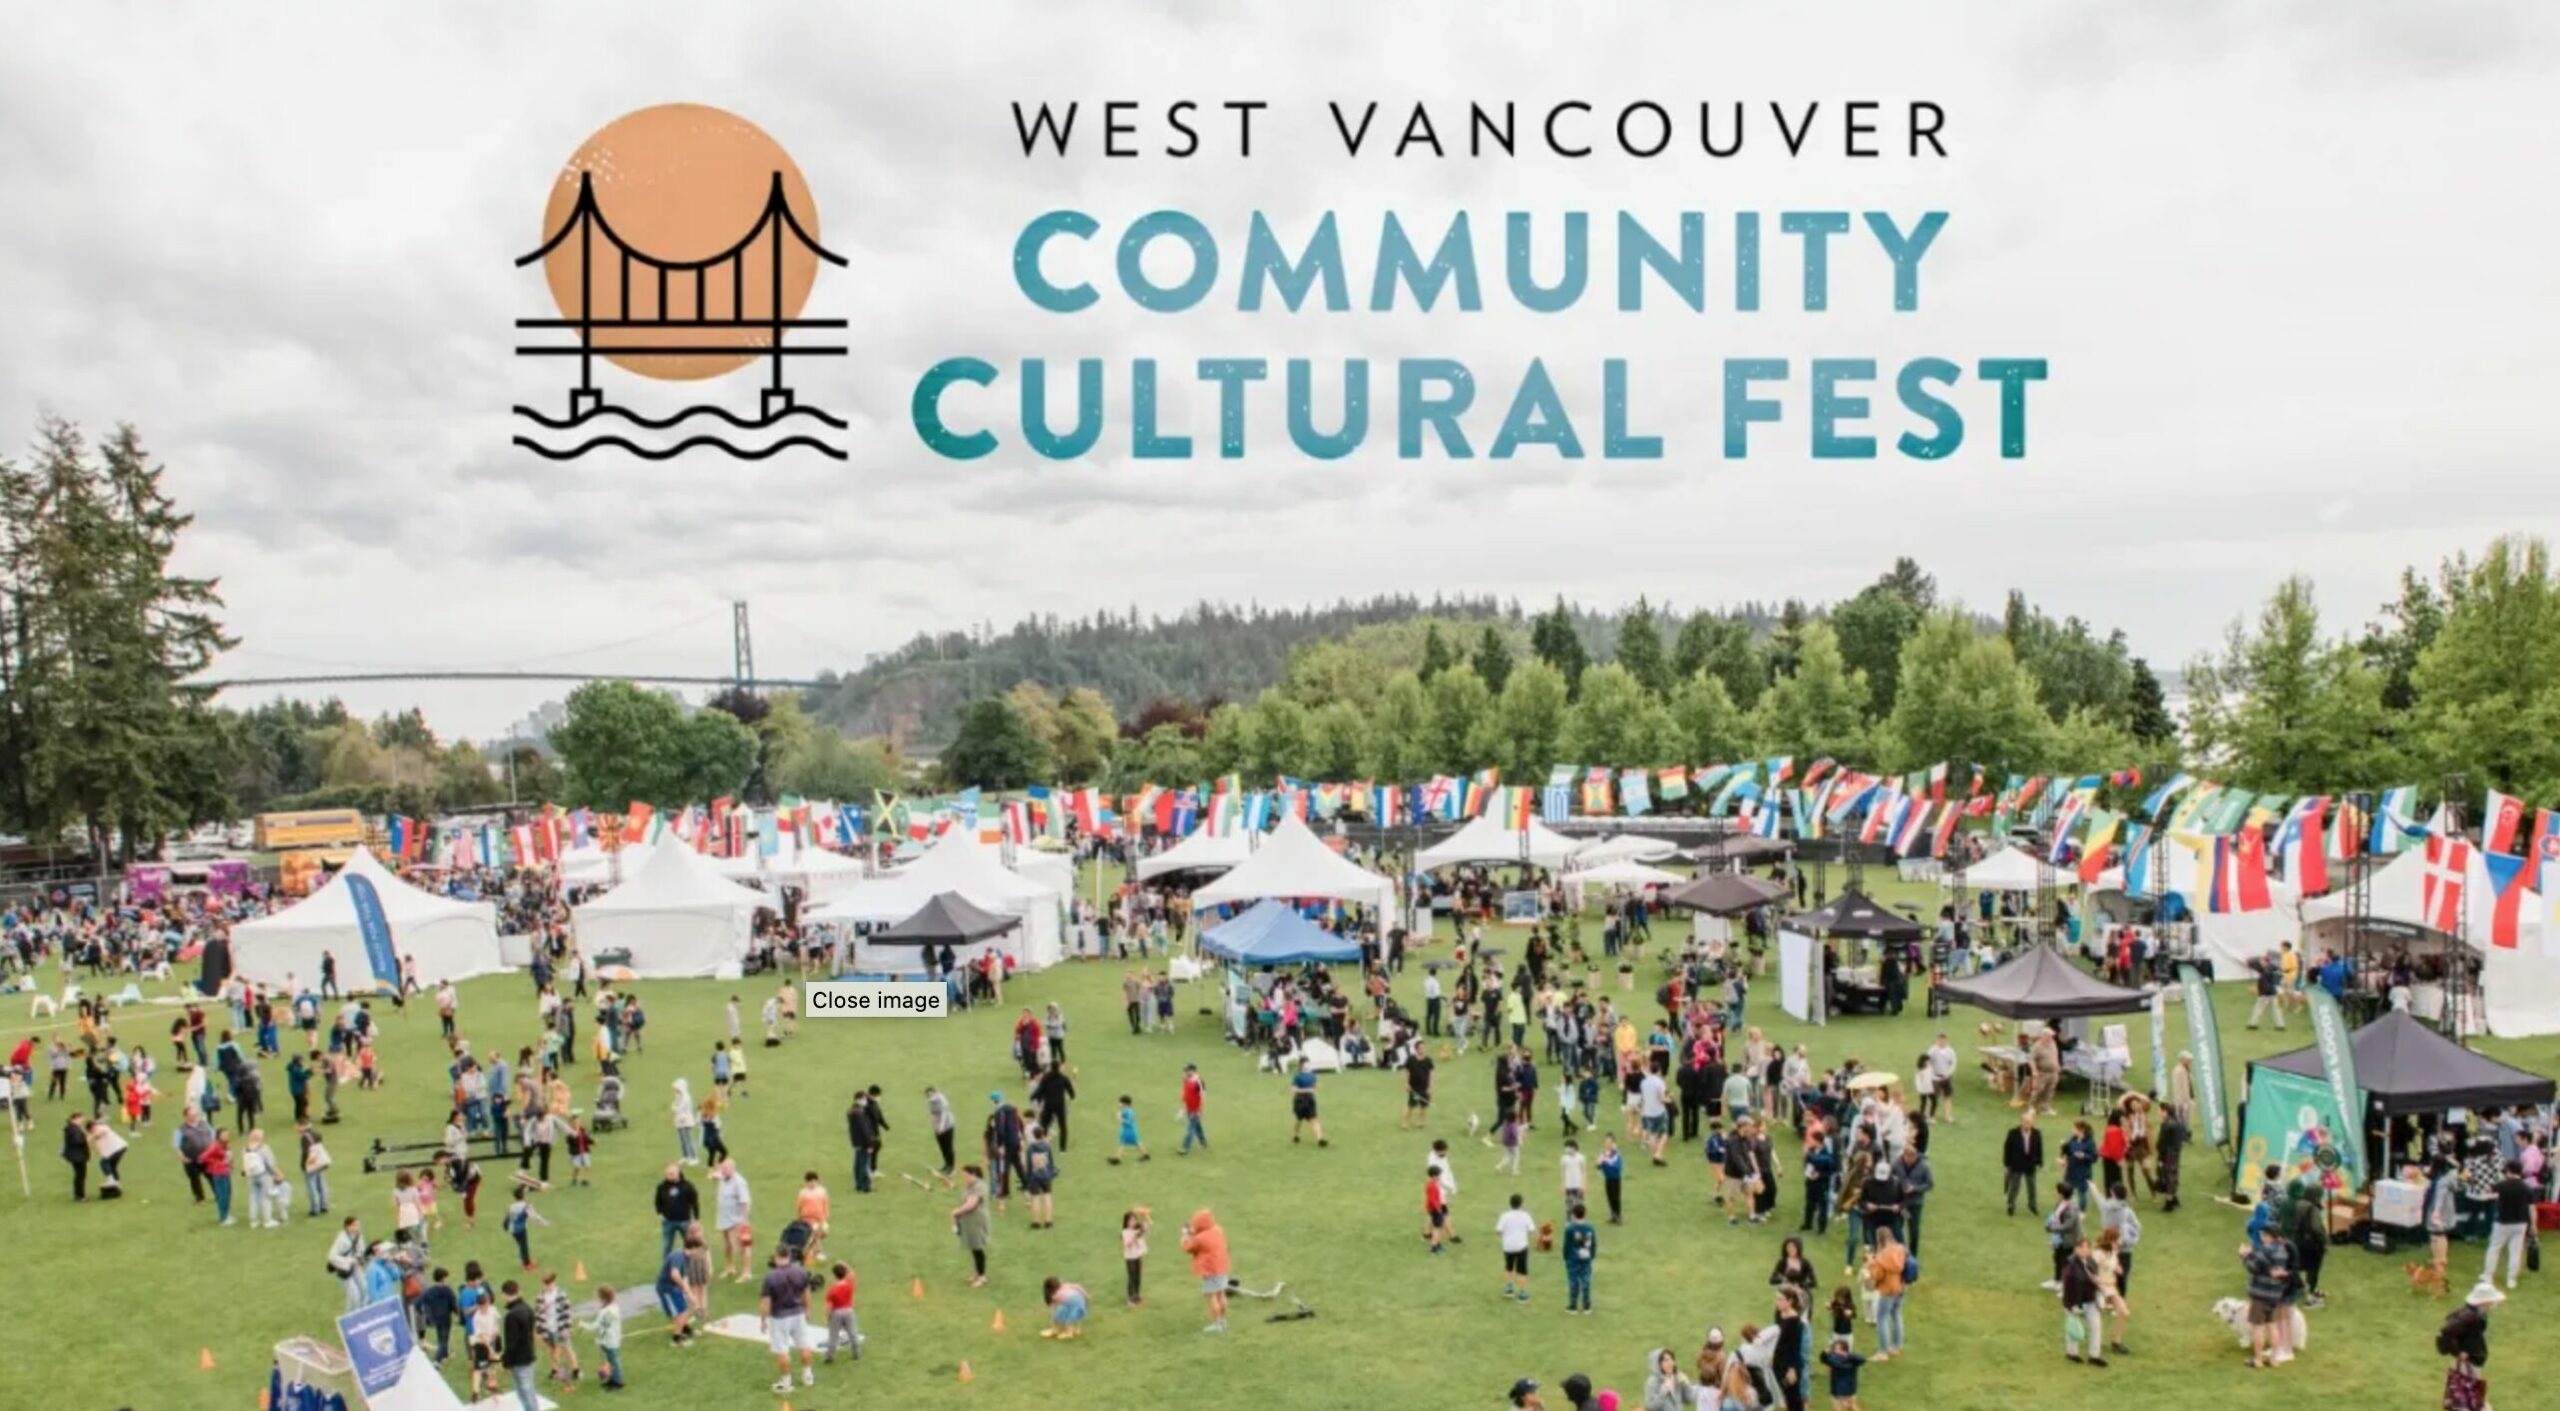 Celebrate Multicultural Diversity at the West Vancouver Community Cultural Fest in Ambleside Park!